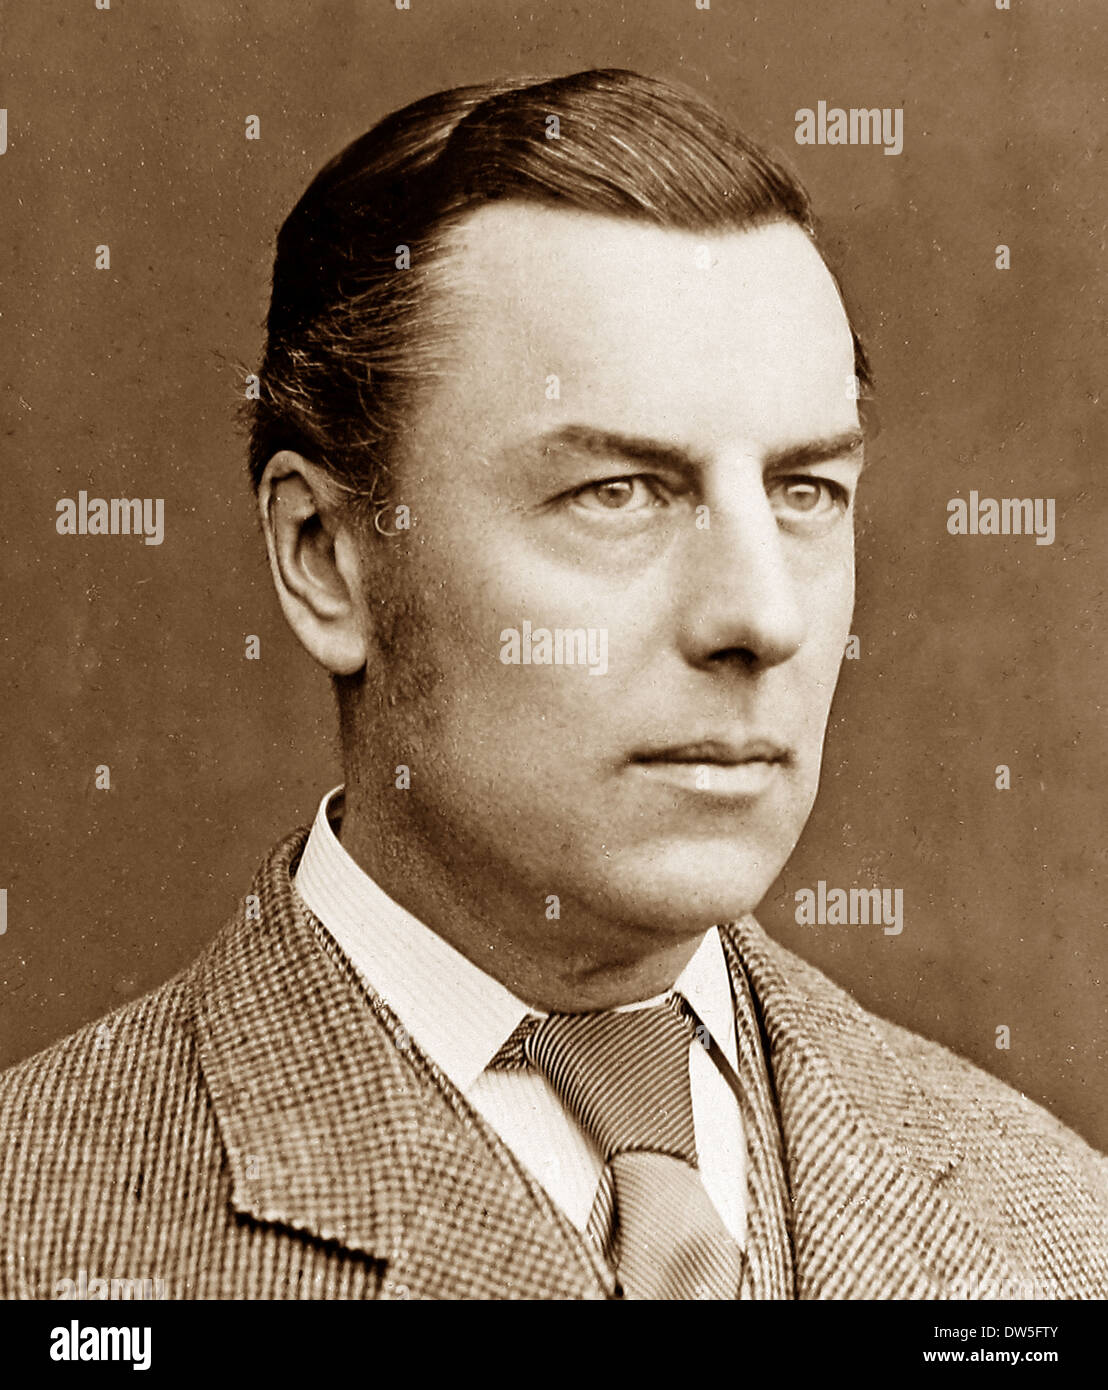 Rt Hon Joseph Chamberlain MP - Mayor of Birmingham - father of Neville Chamberlain - Victorian period Stock Photo